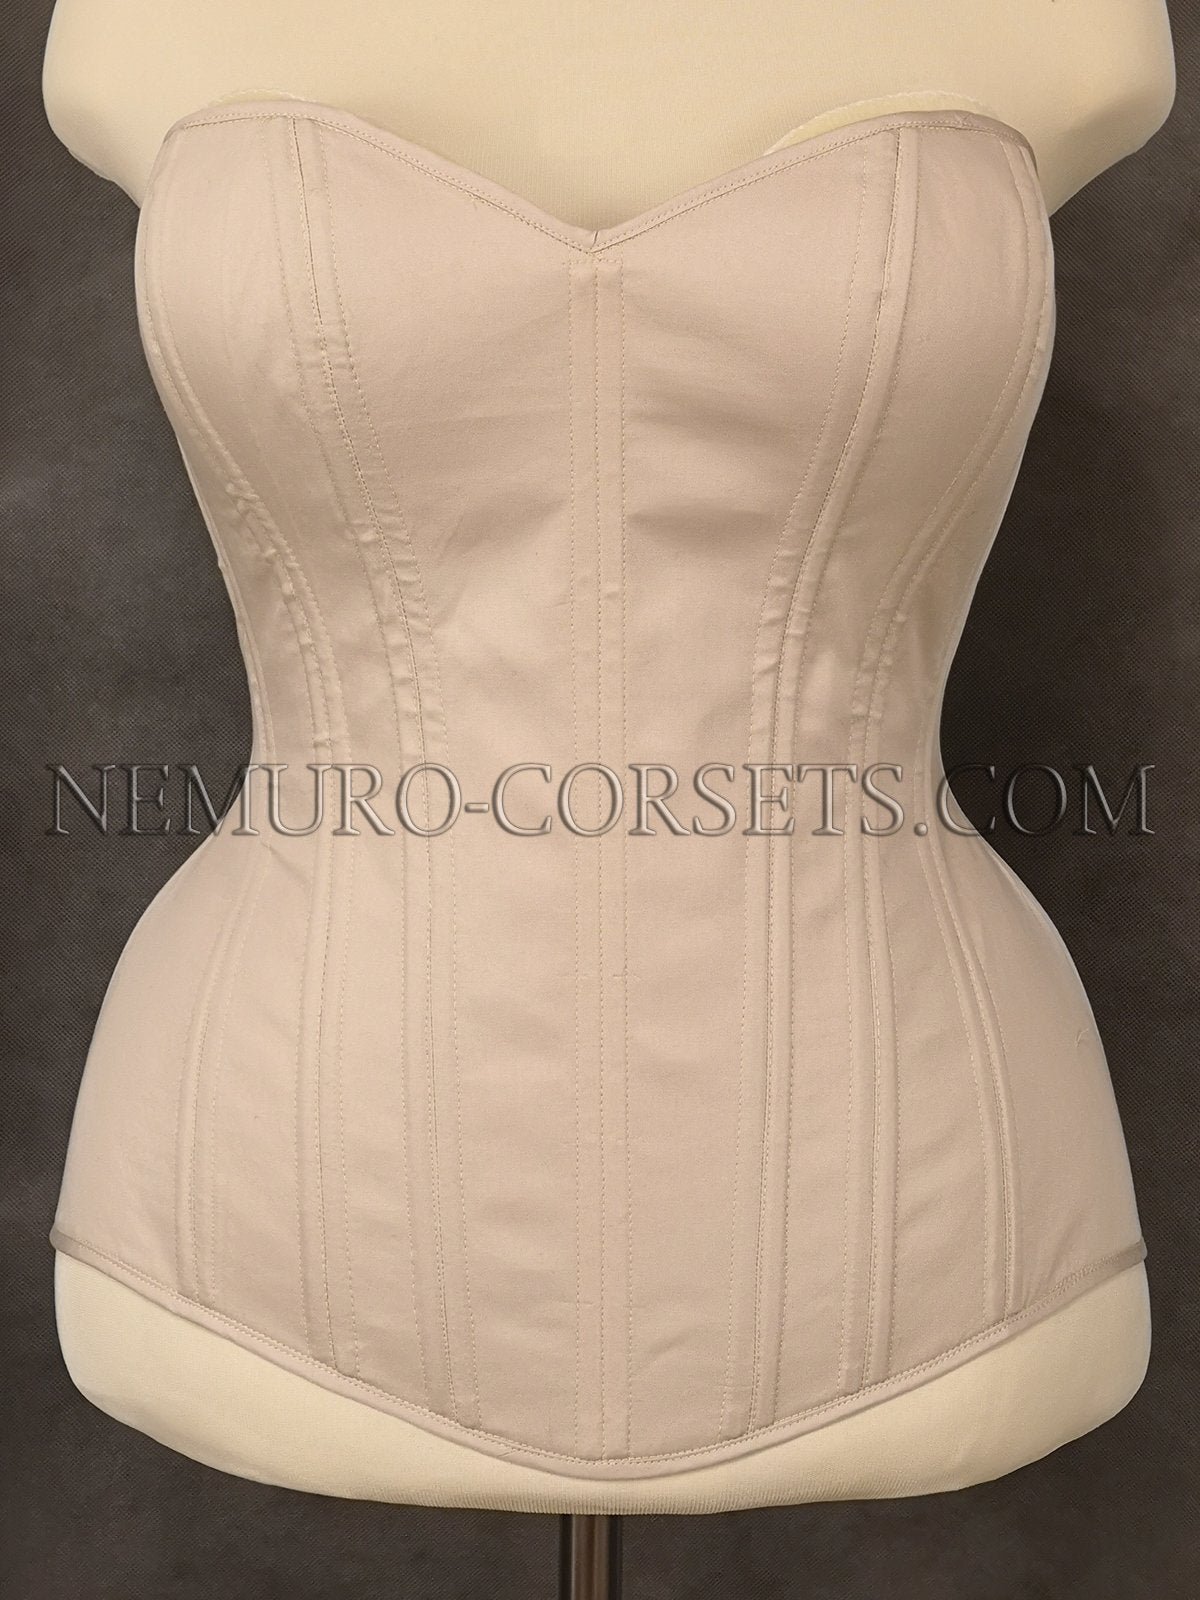 Classic Overbust corset solid front - Custom order Nemuro-Corsets